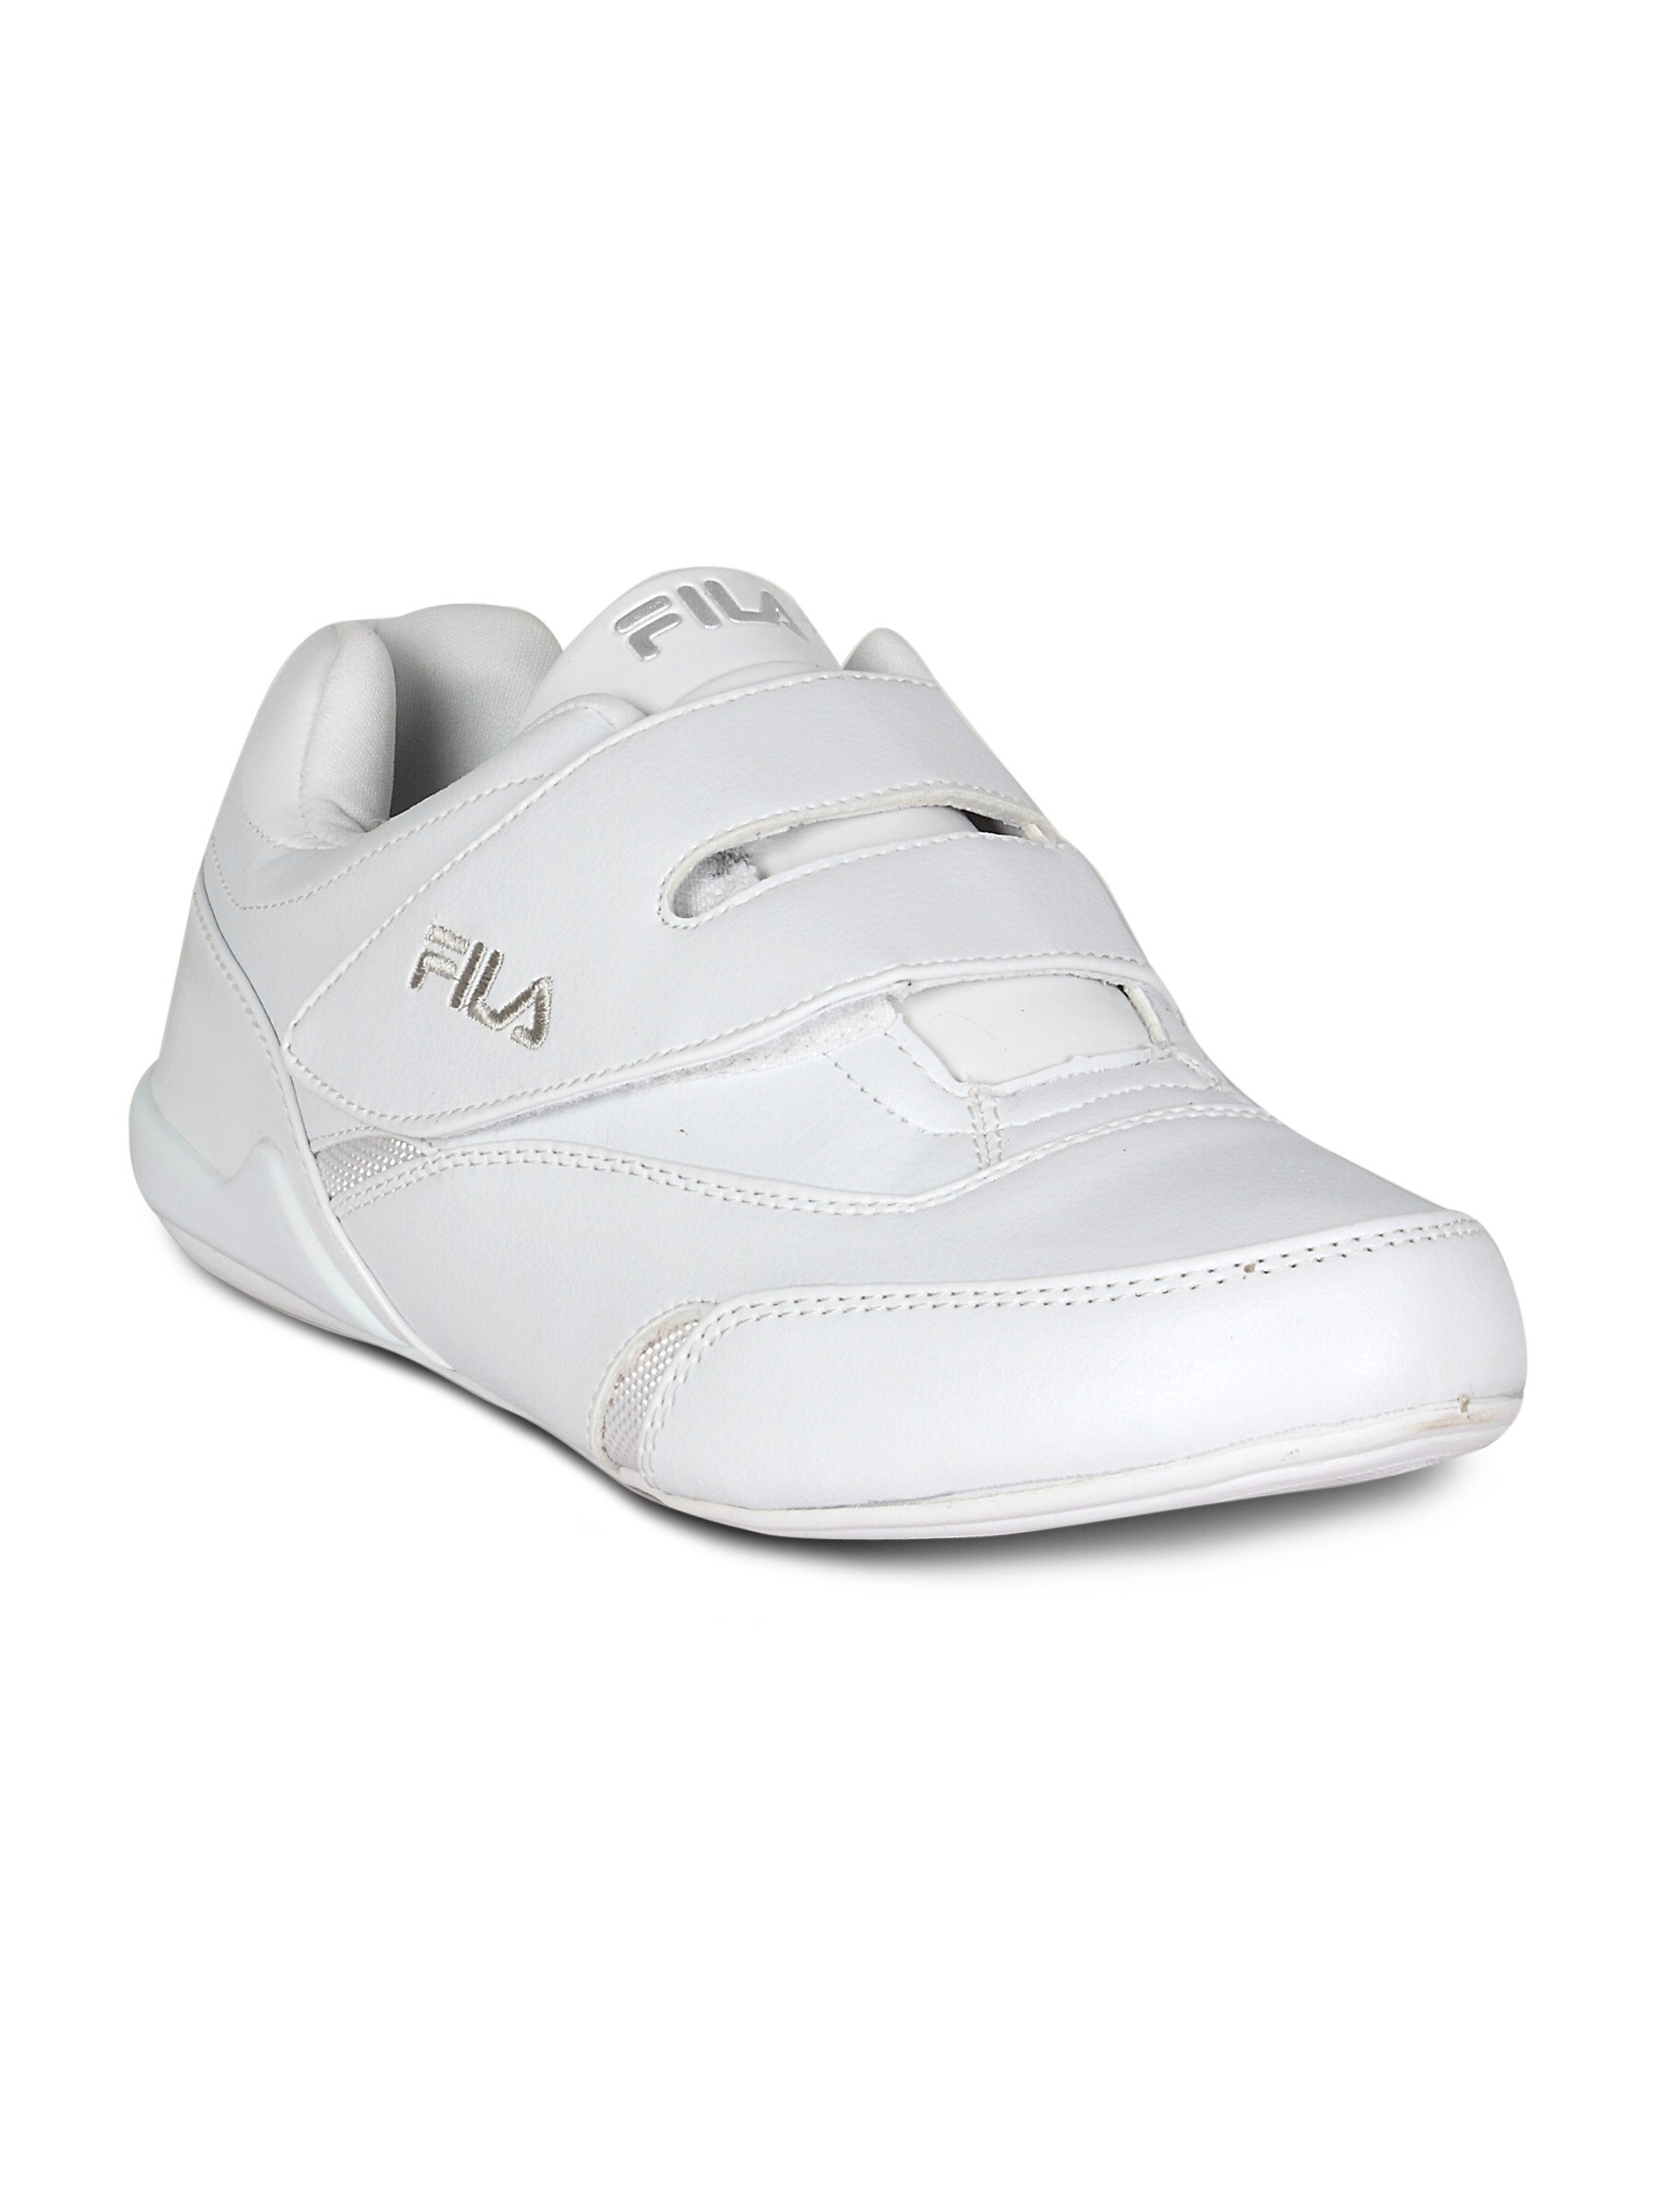 Fila Men's Galliant White Shoe